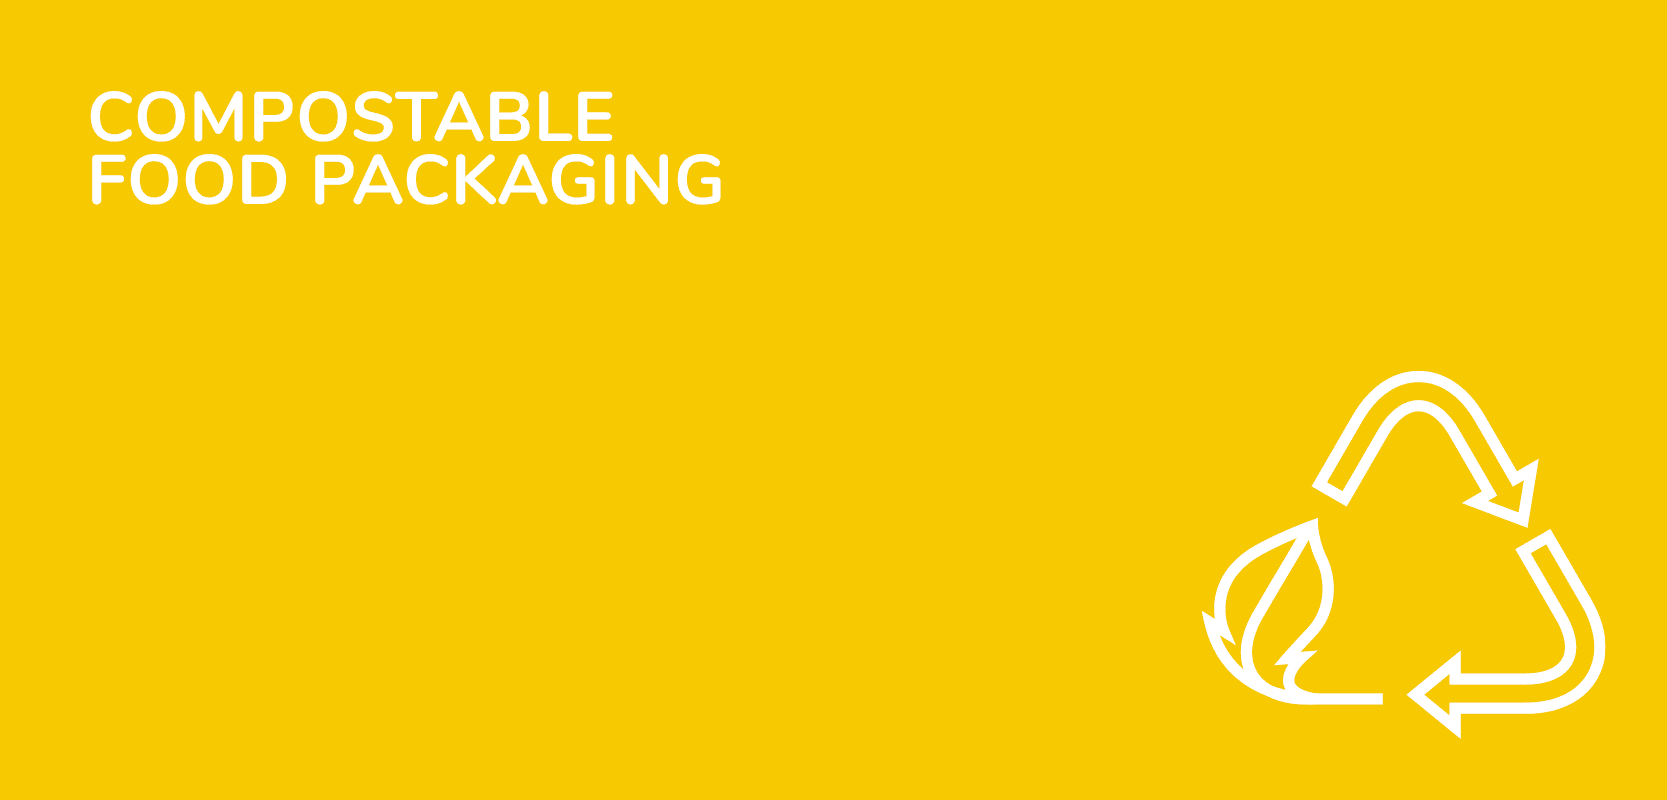 Compostable Food Packaging